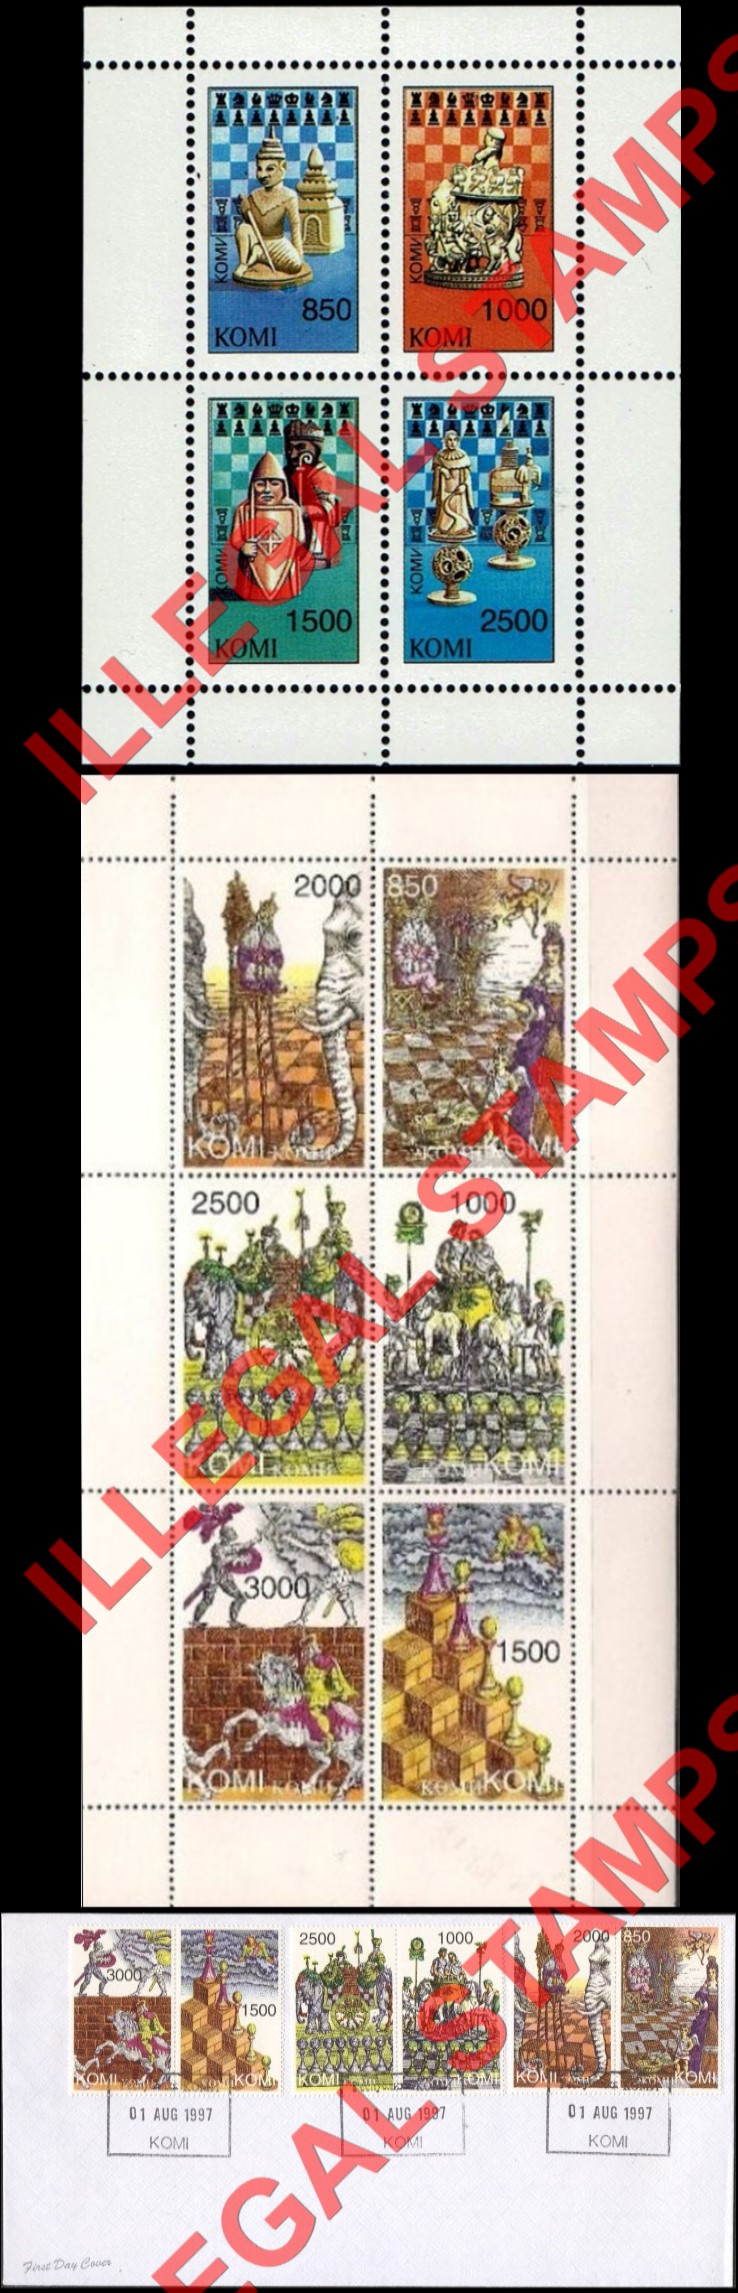 Komi Republic 1997 Counterfeit Illegal Stamps (Part 3)